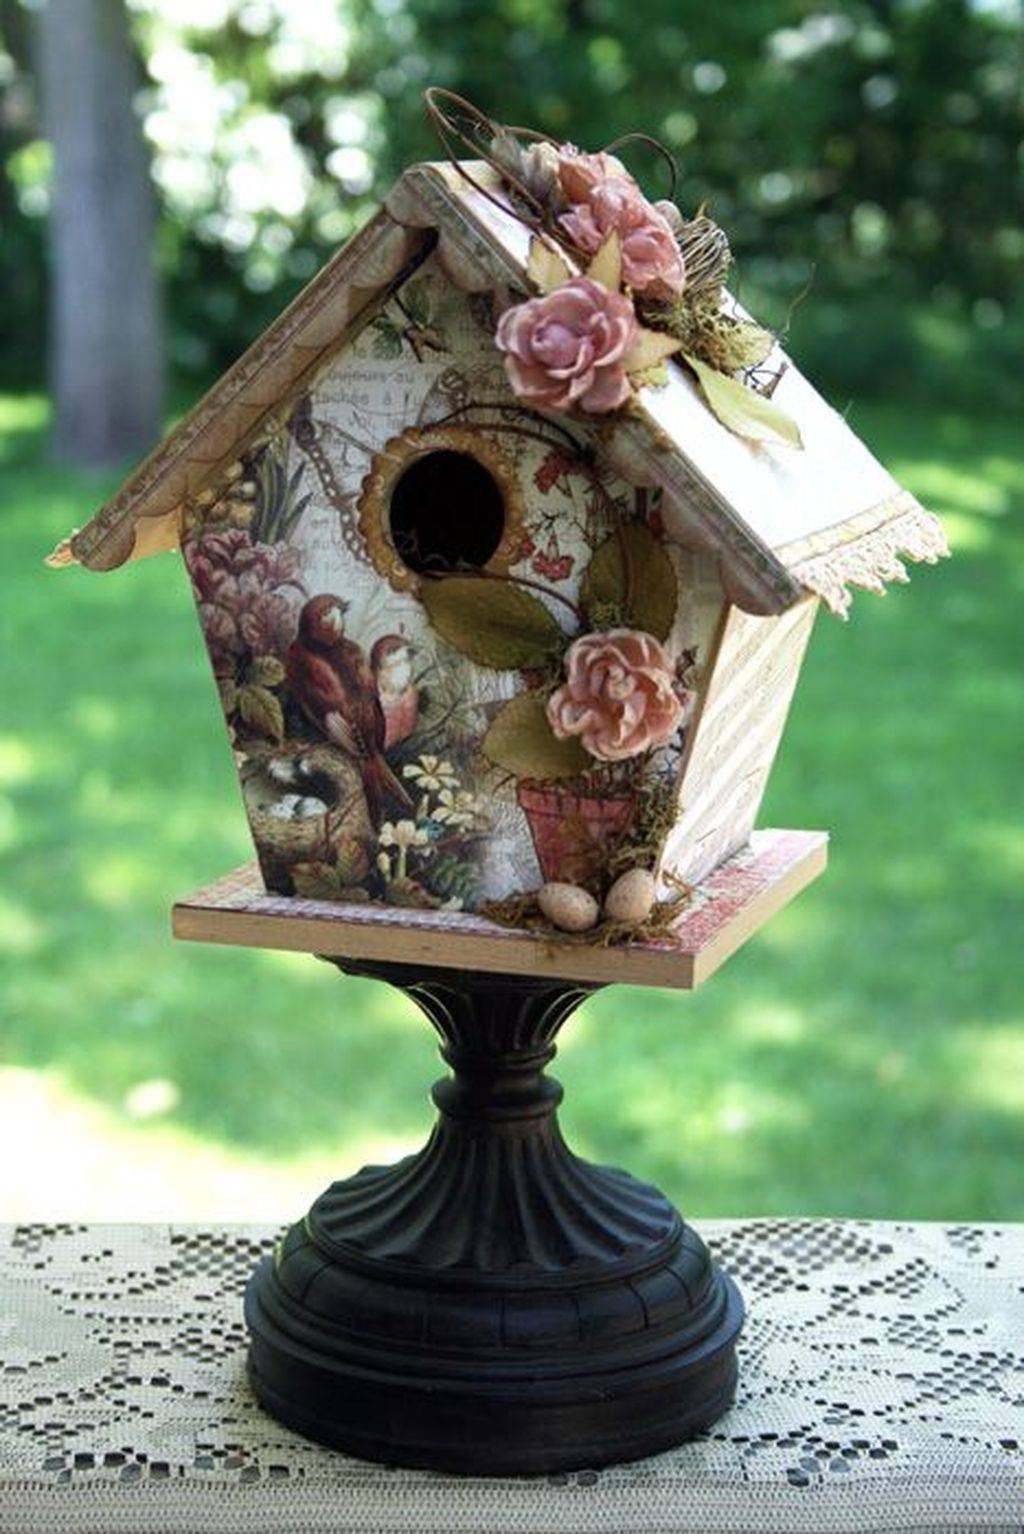 Beautiful Bird House Designs